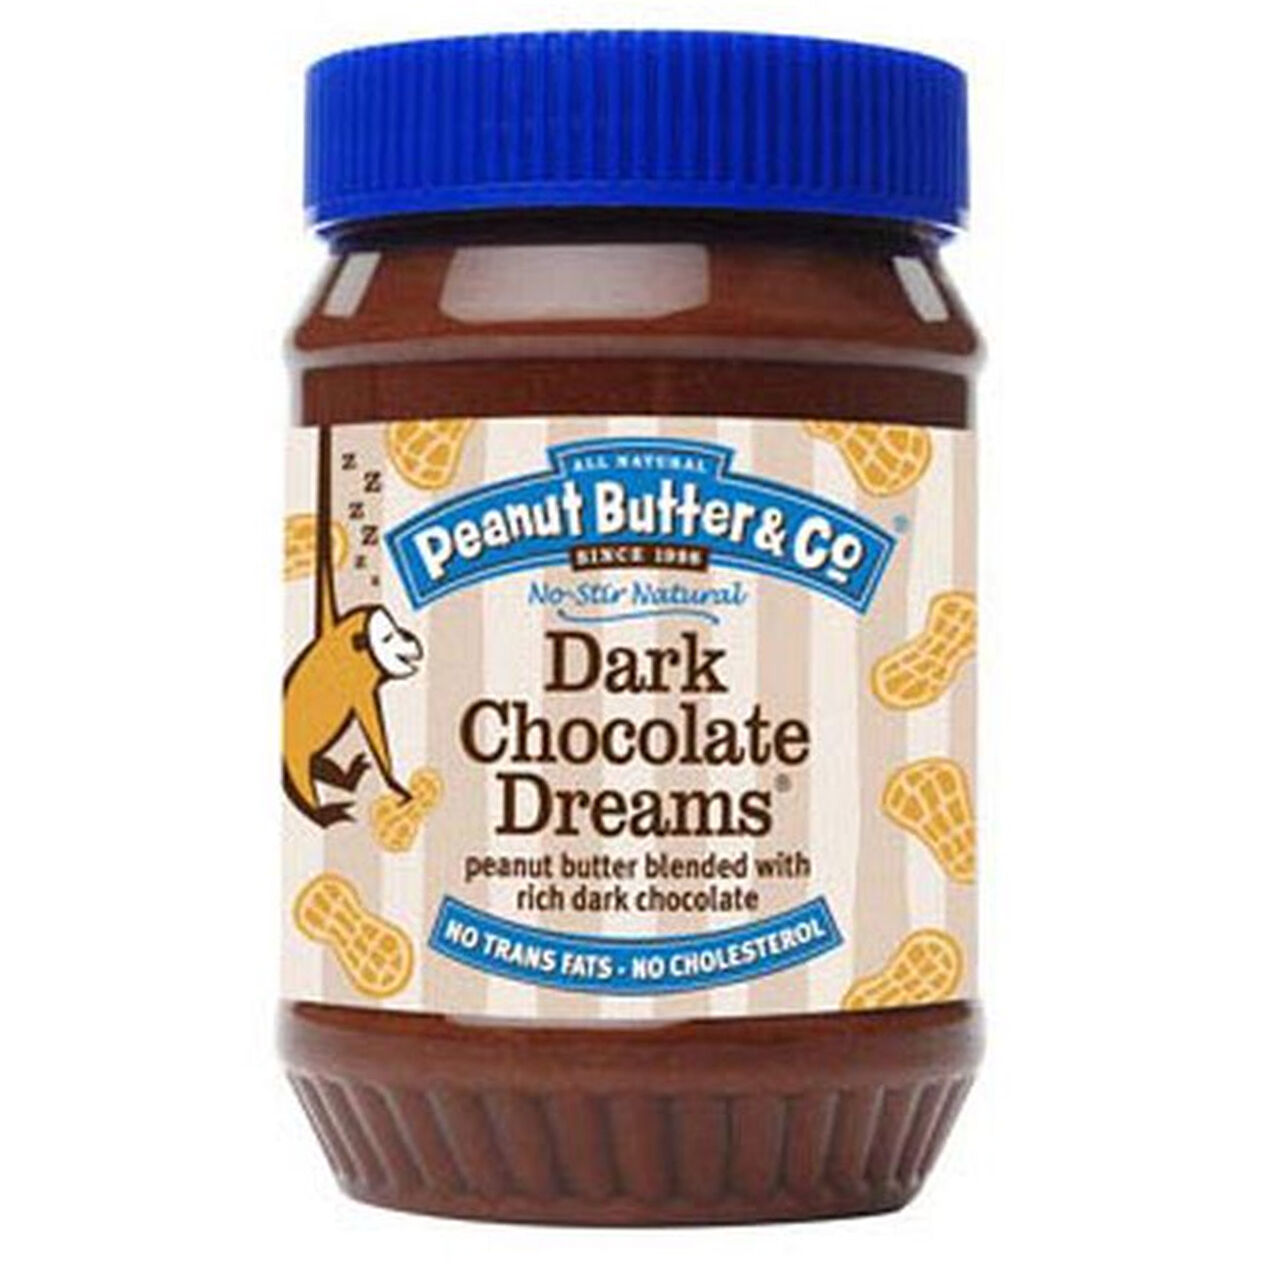 All Natural Peanut Butter & Co. Dark Chocolate Dreams - 16oz (Kosher), , large image number 0